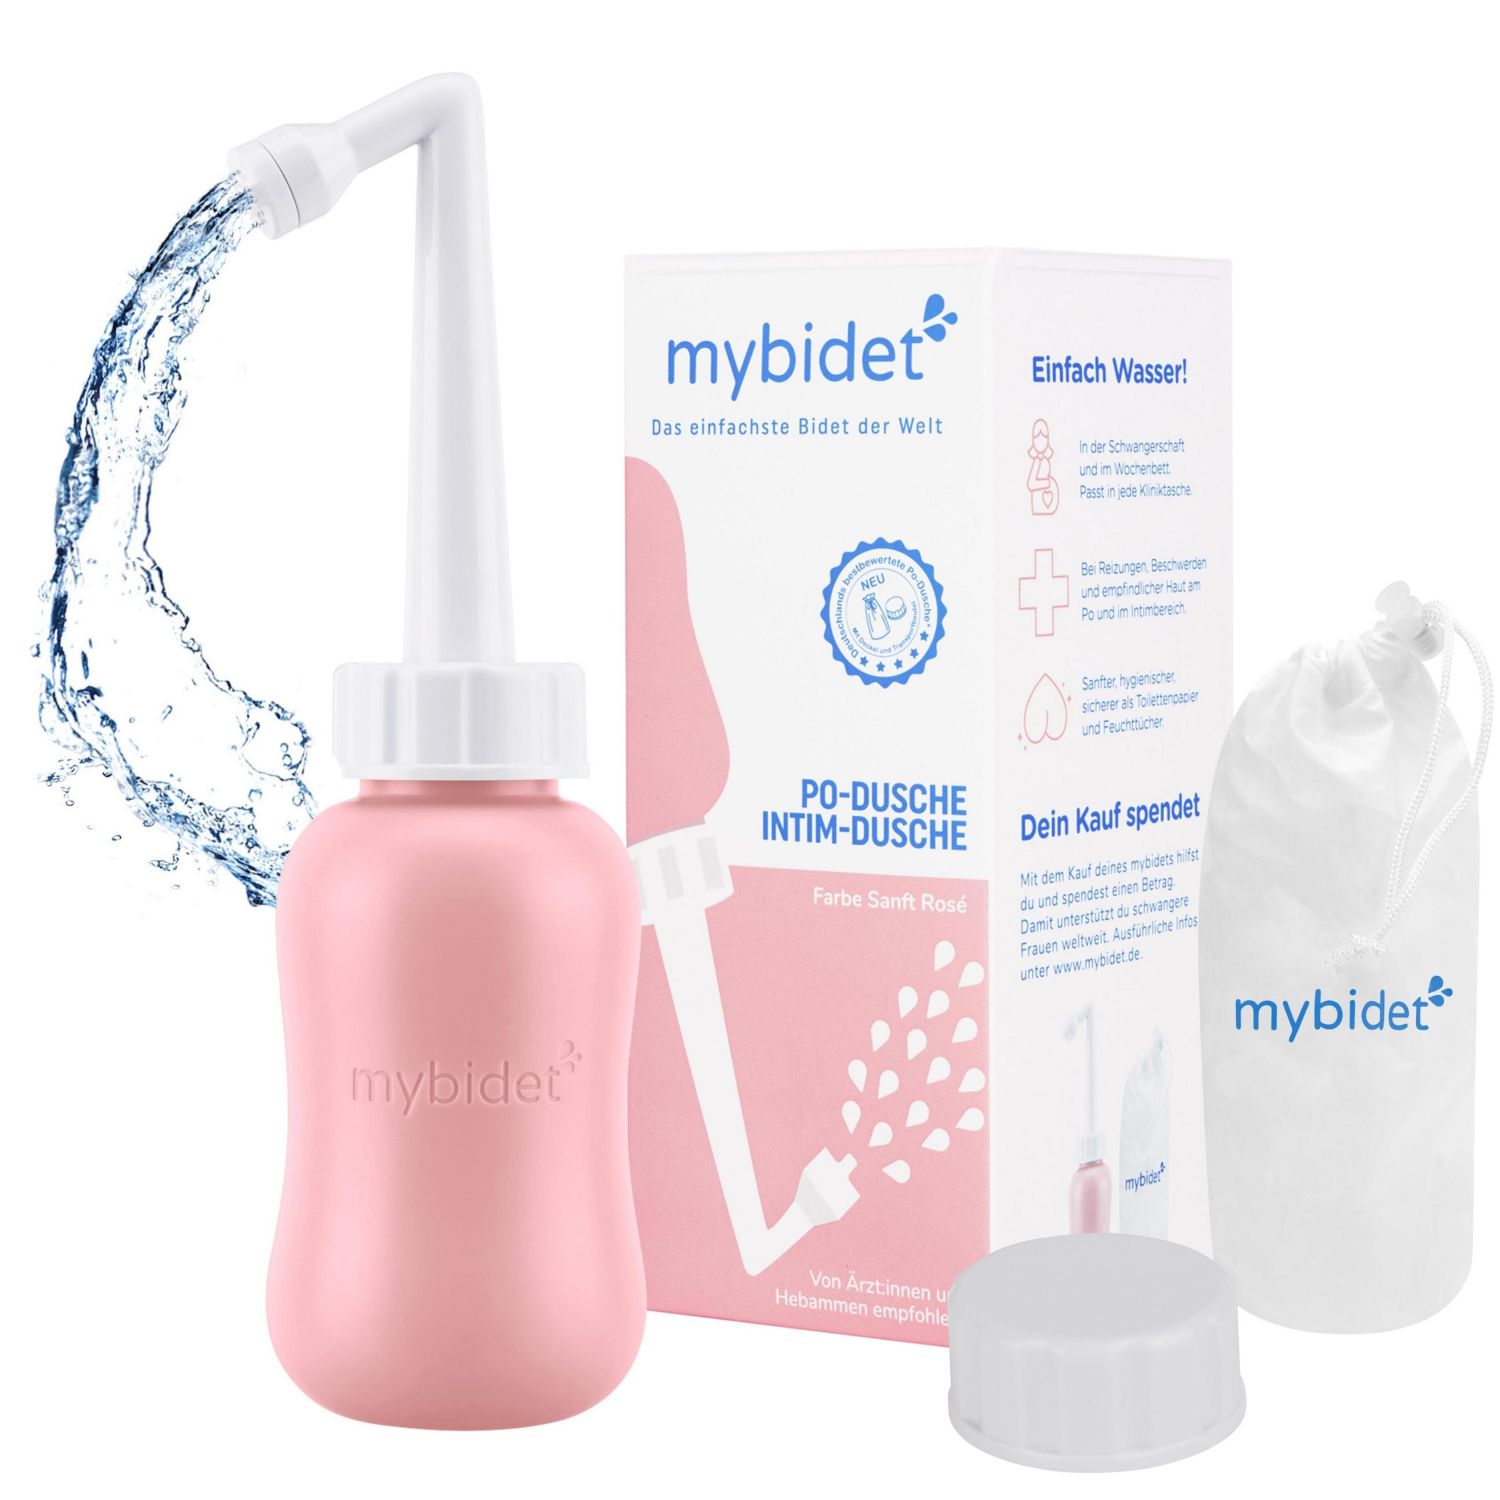 mybidet 3.0 Intim-Dusche